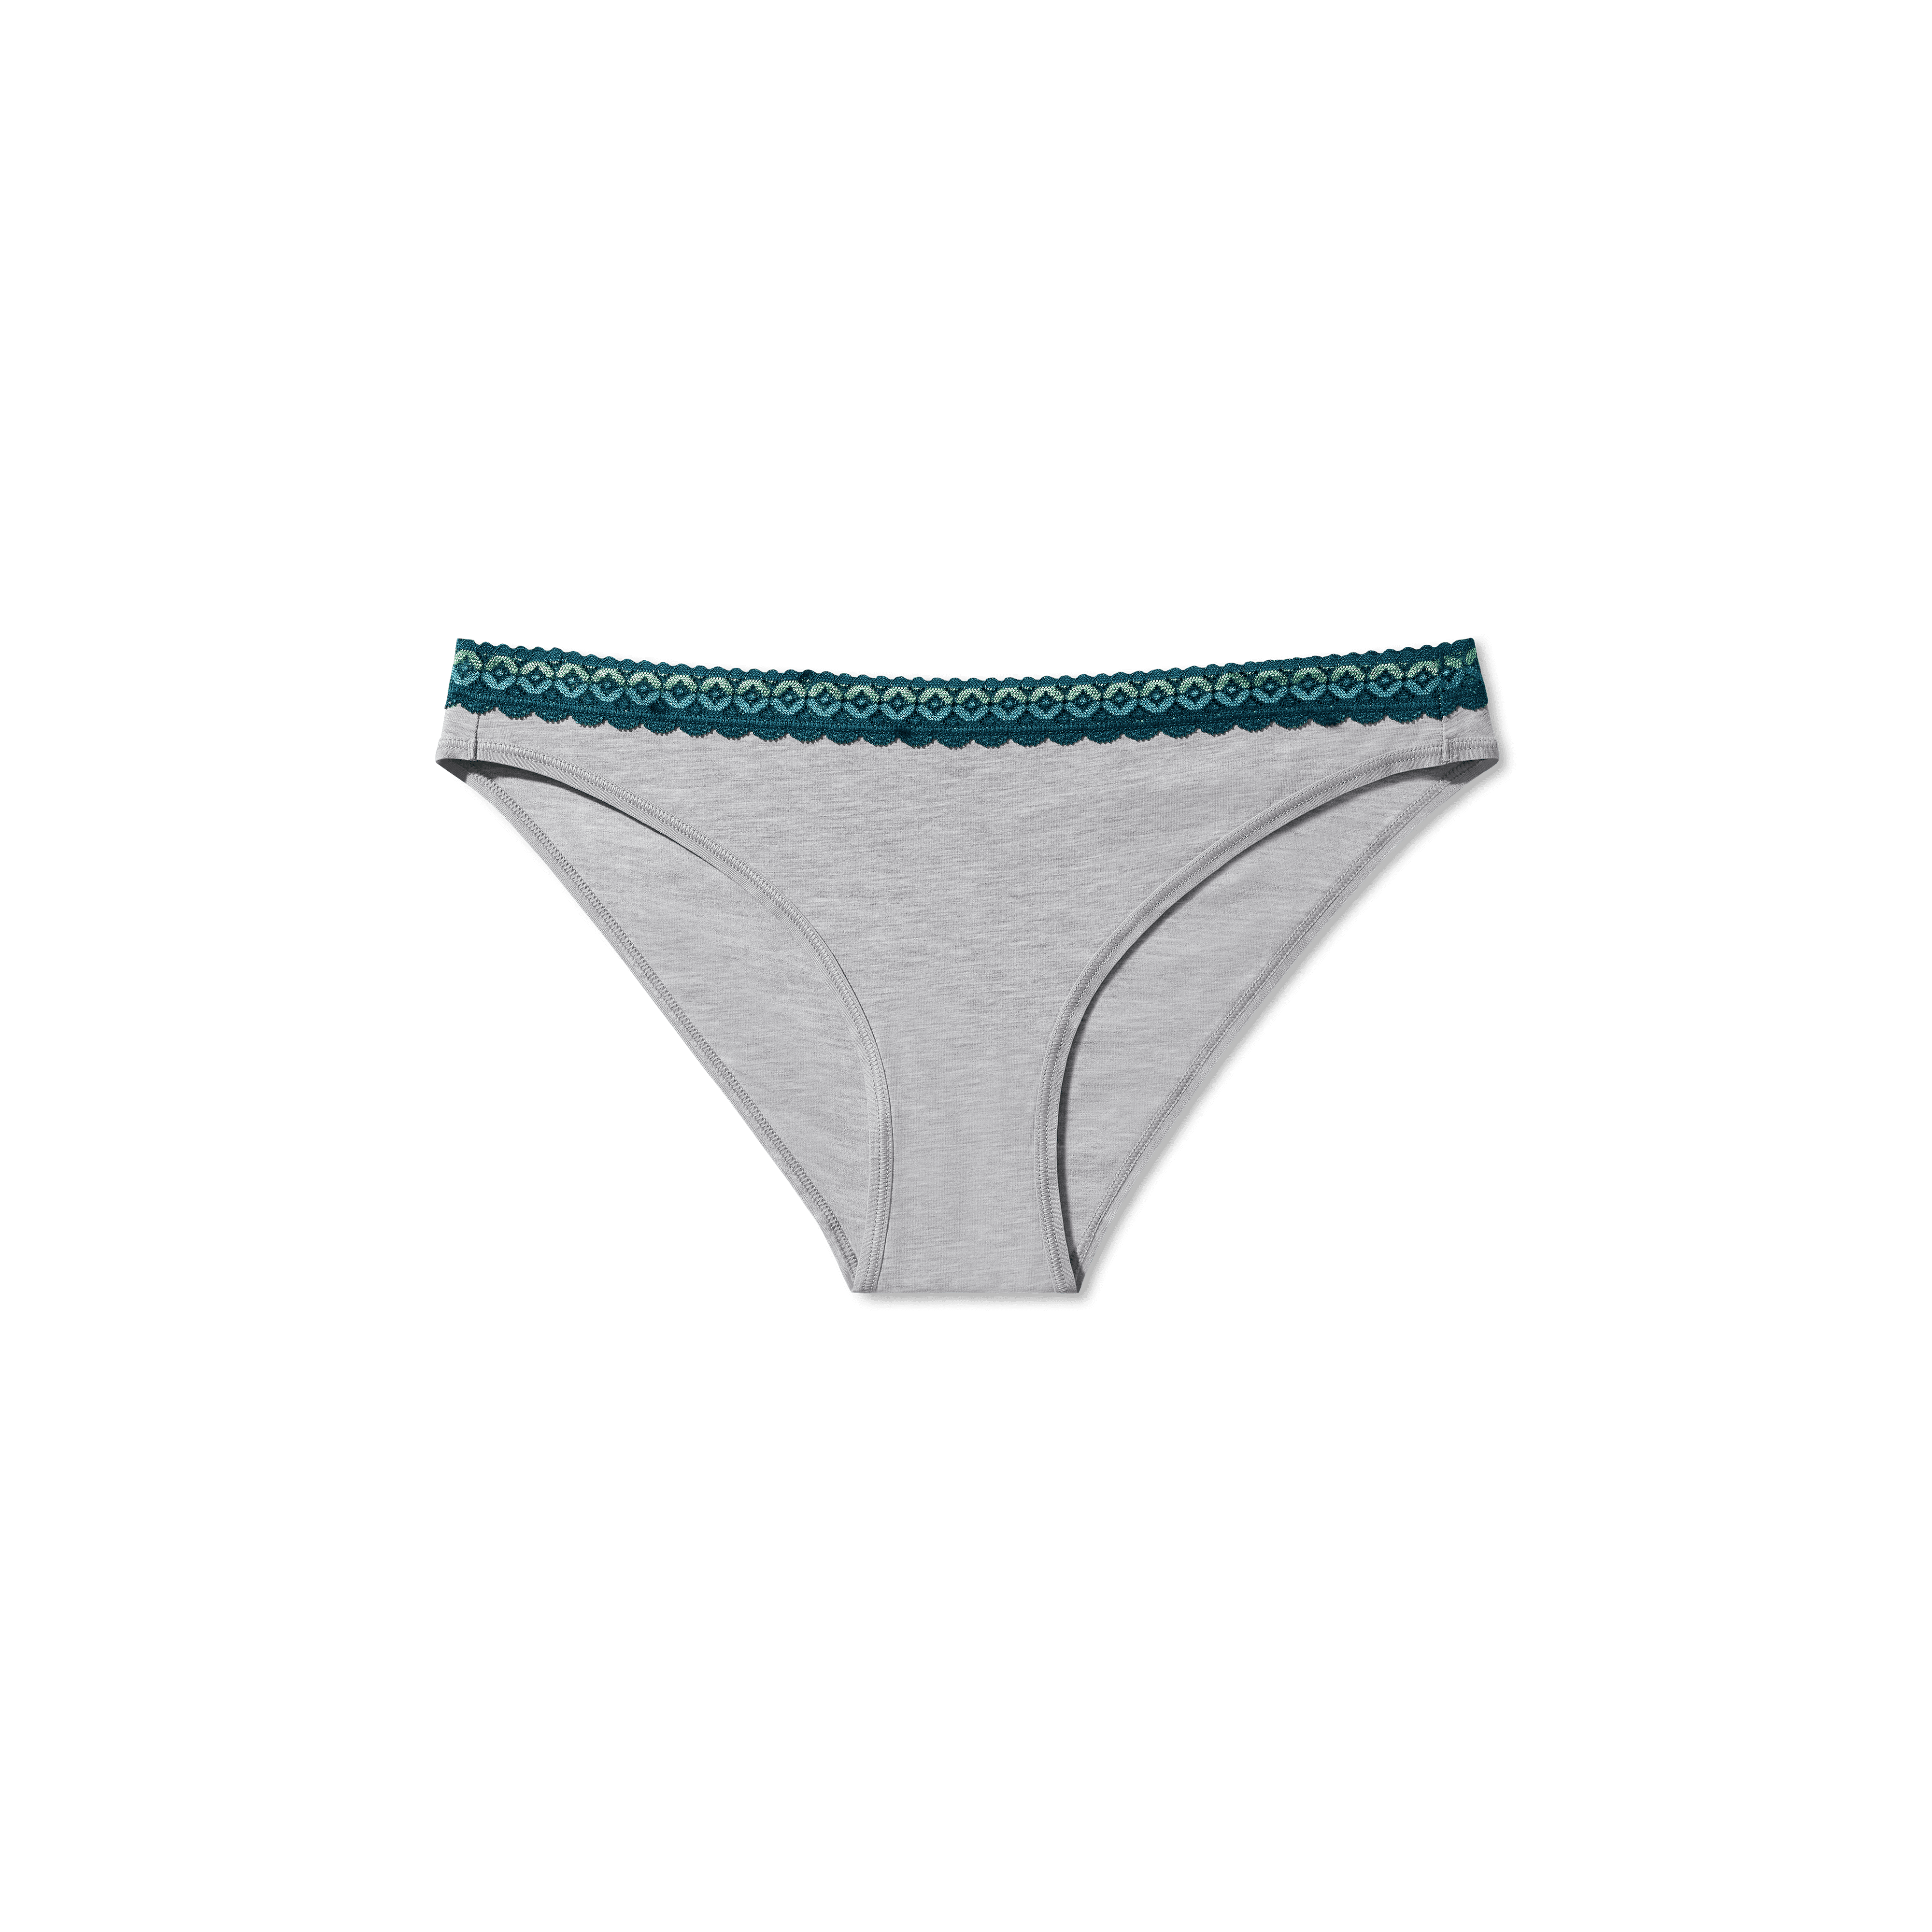 Dye Sublimation Ladies Bikini Underwear Mockup Add Your Own Image and  Background -  Canada